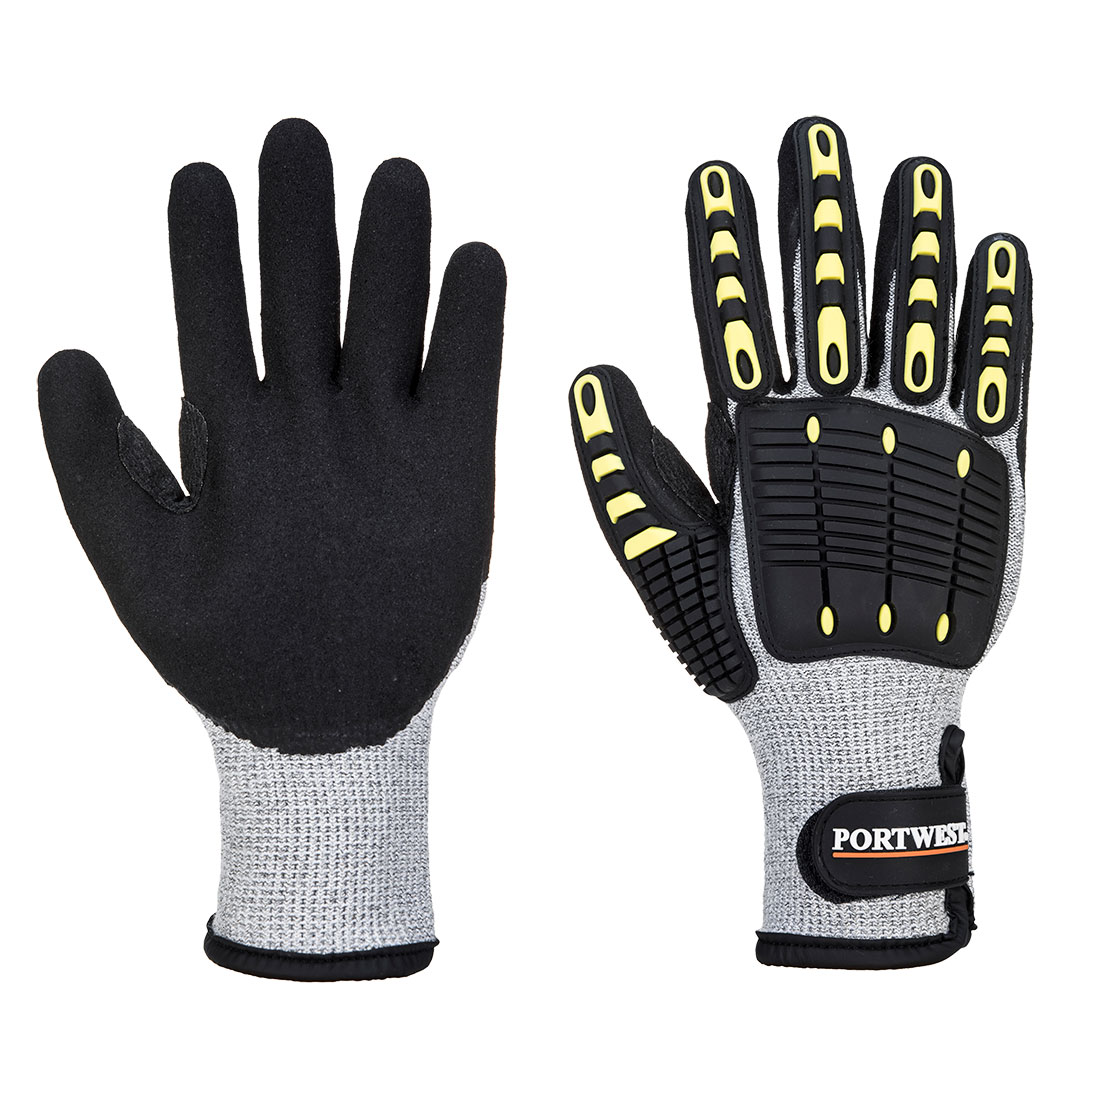 Portwest Anti Impact Cut Resistant Thermal Glove